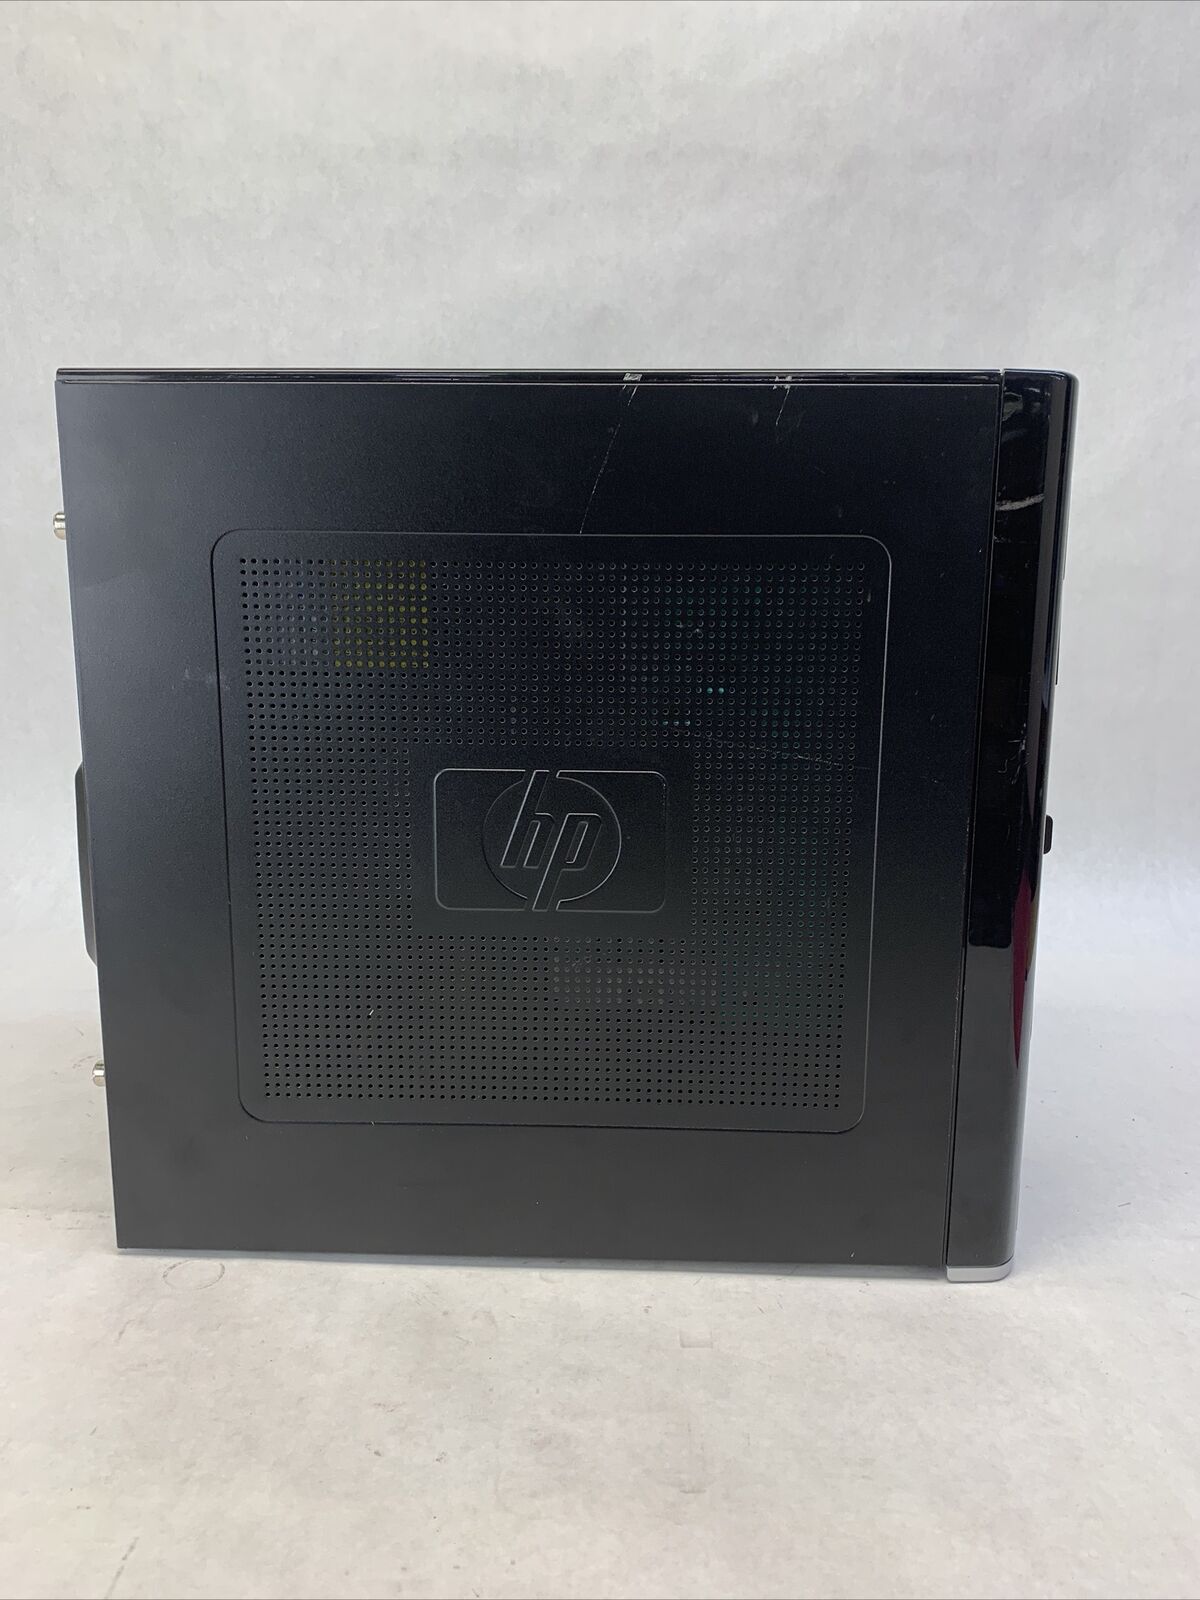 HP Pavilion M8020N MT Intel Core 2 Duo E6420 2.13GHz 4GB RAM No HDD No OS